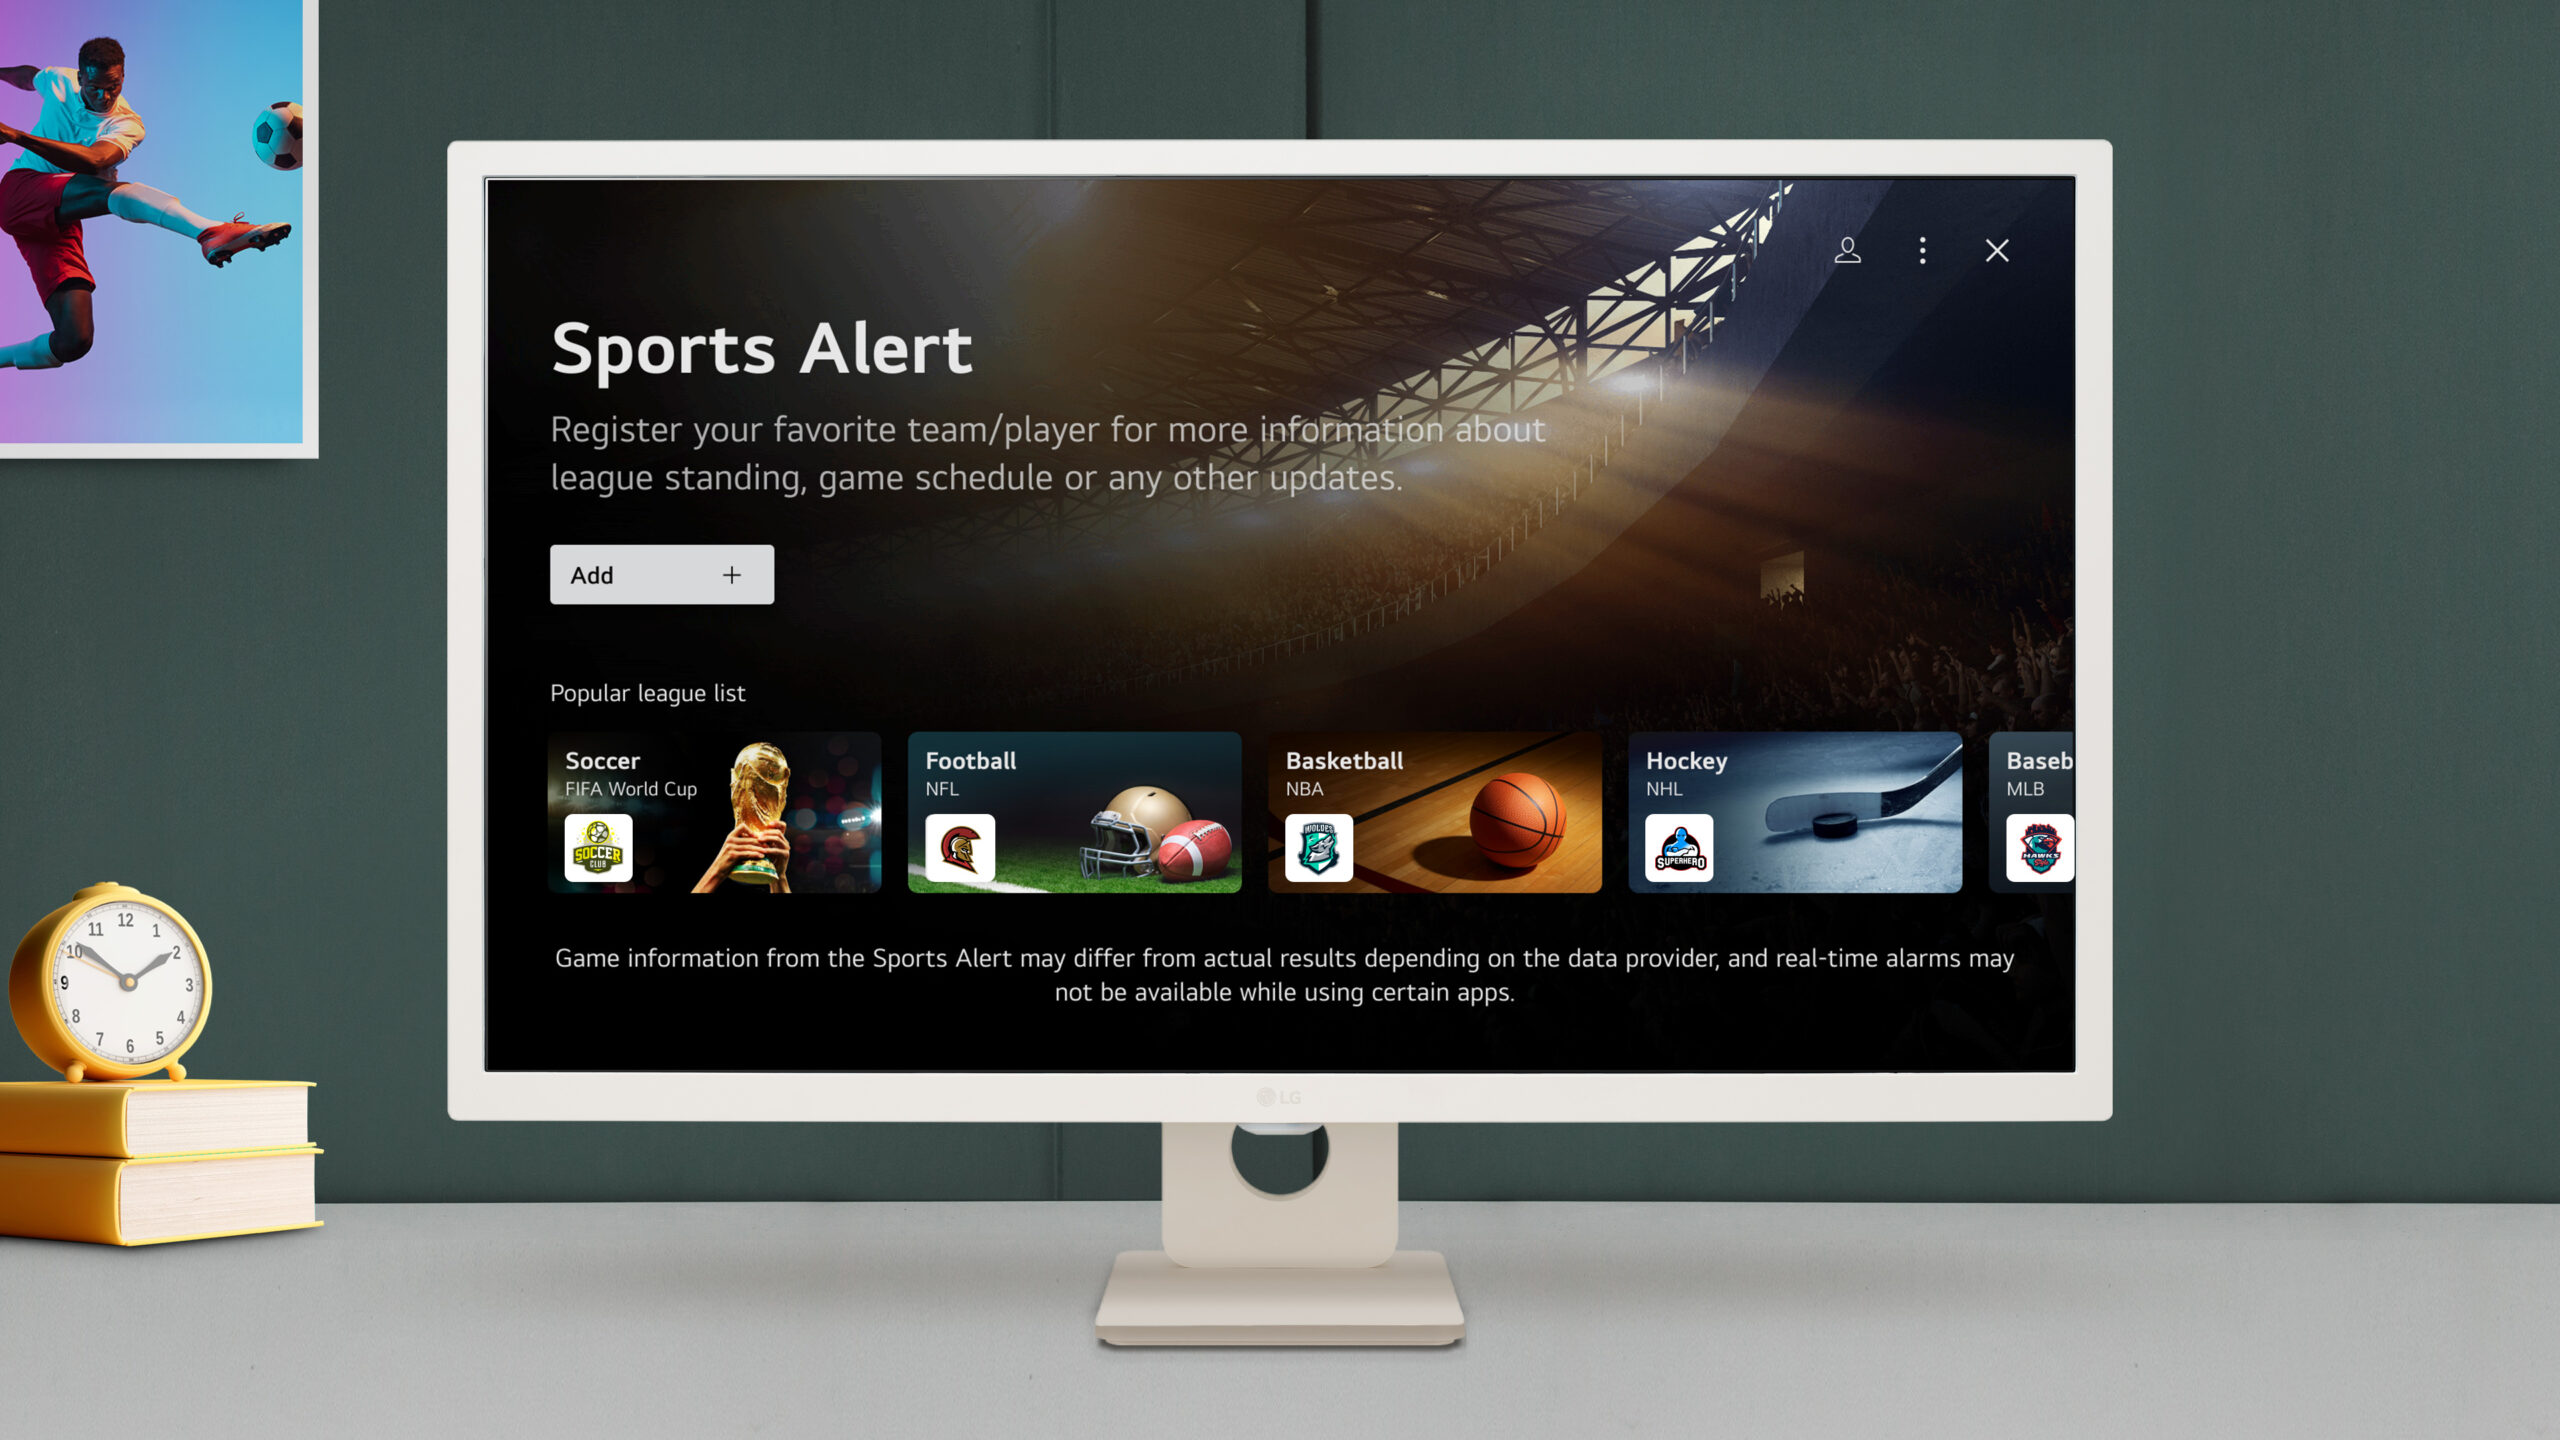 LG SMART Monitor displaying sports alert feature